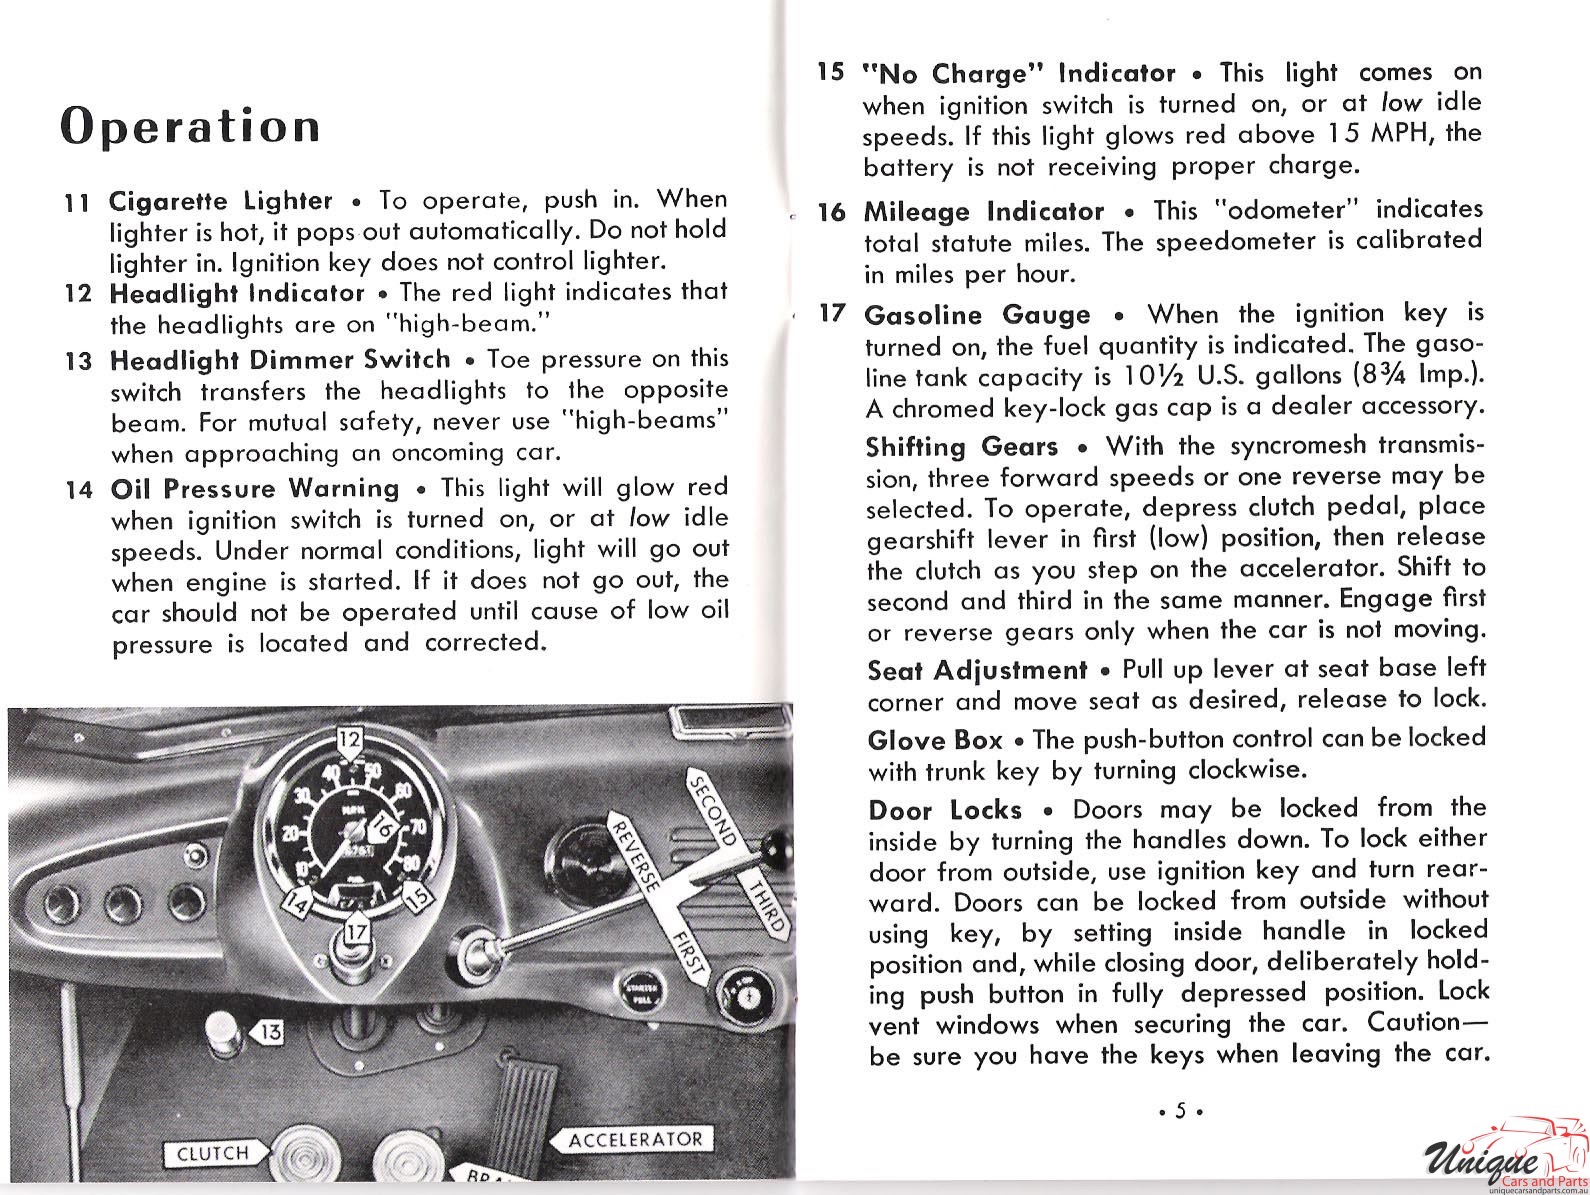 1957 Nash Metropolitan Owners Manual Page 5